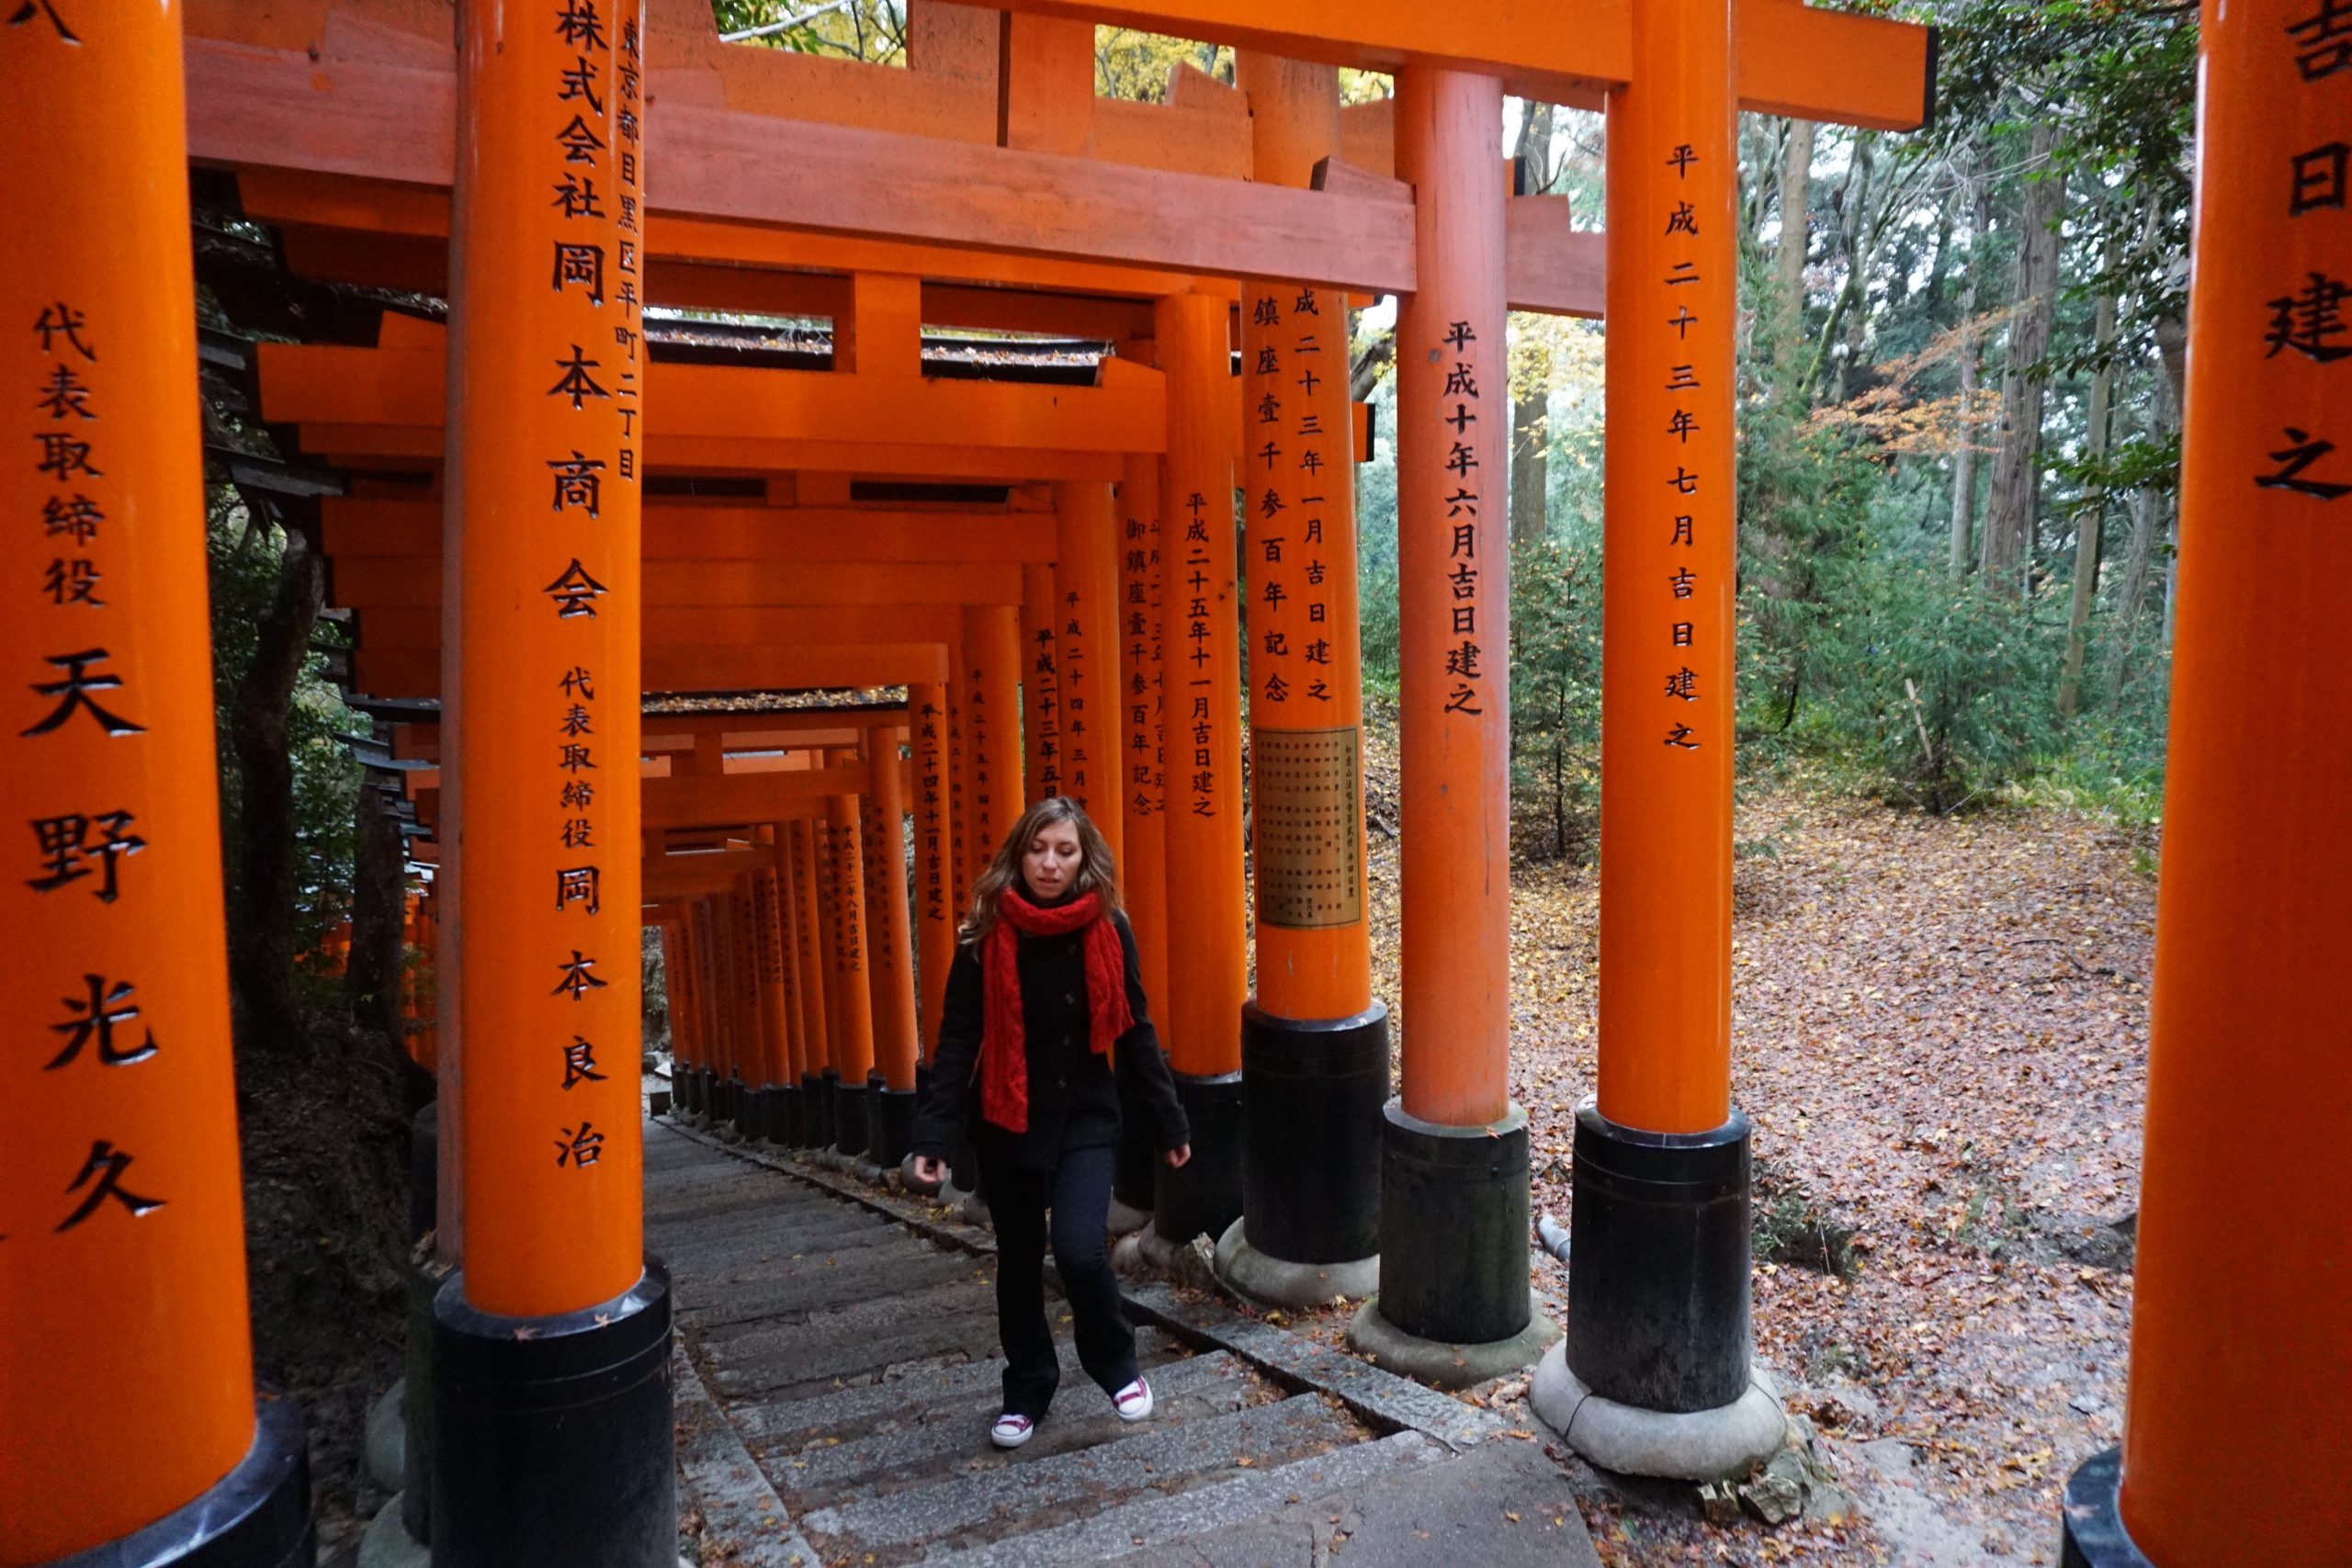 Cory dressed for December in Kyoto at Fushimi Inari Shrine